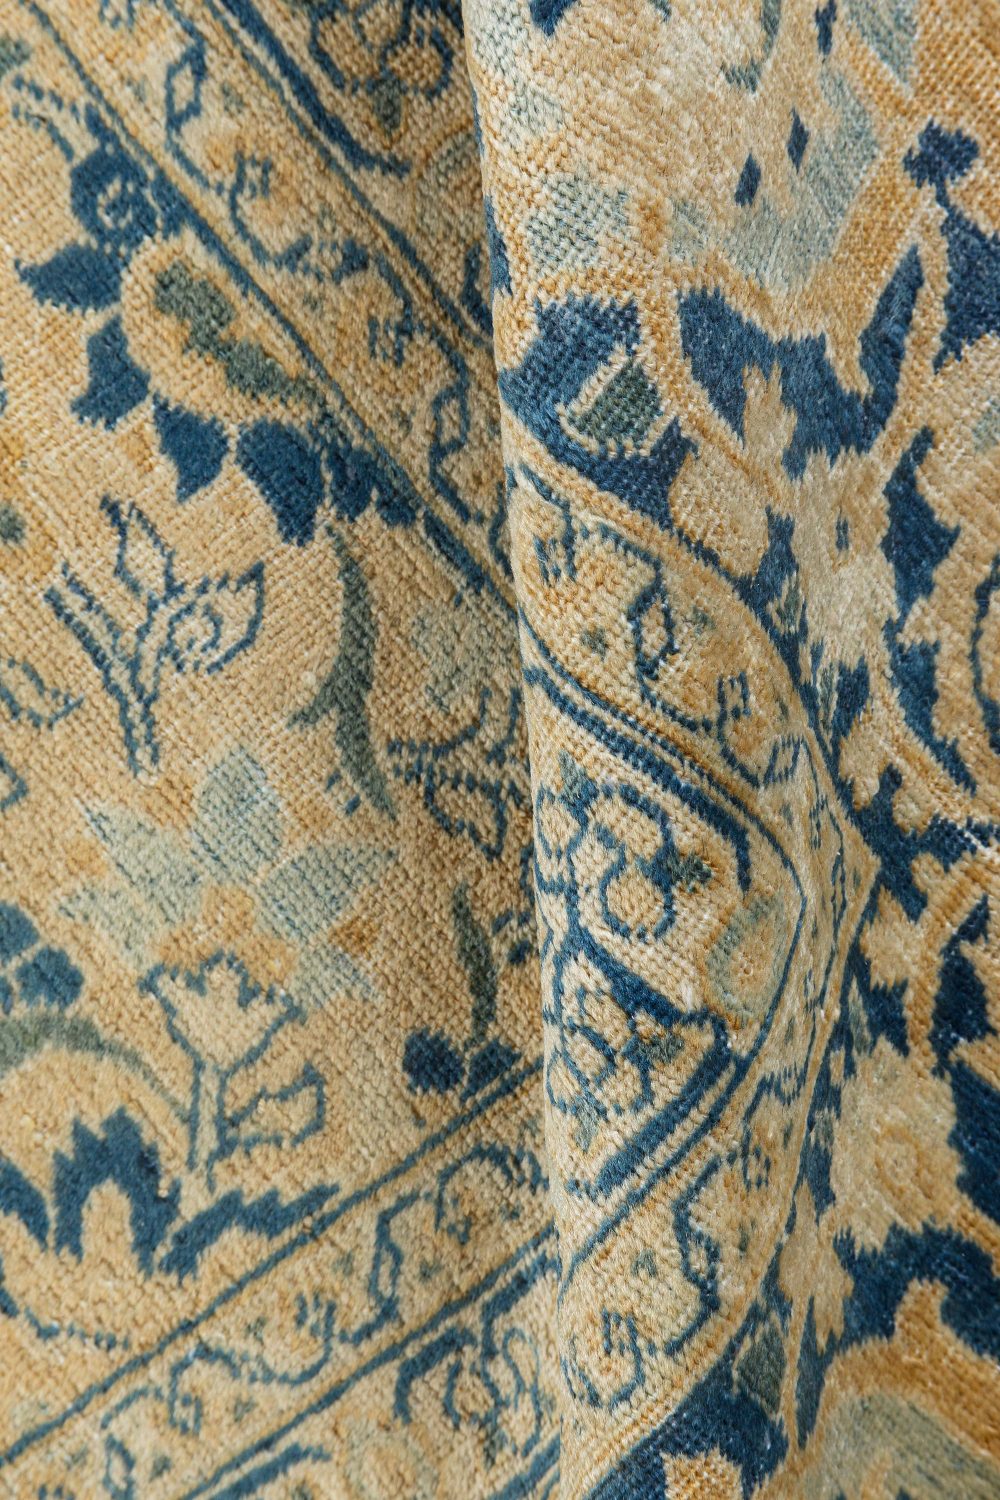 Early 20th Century Persian Tabriz Handmade Wool Rug BB7159